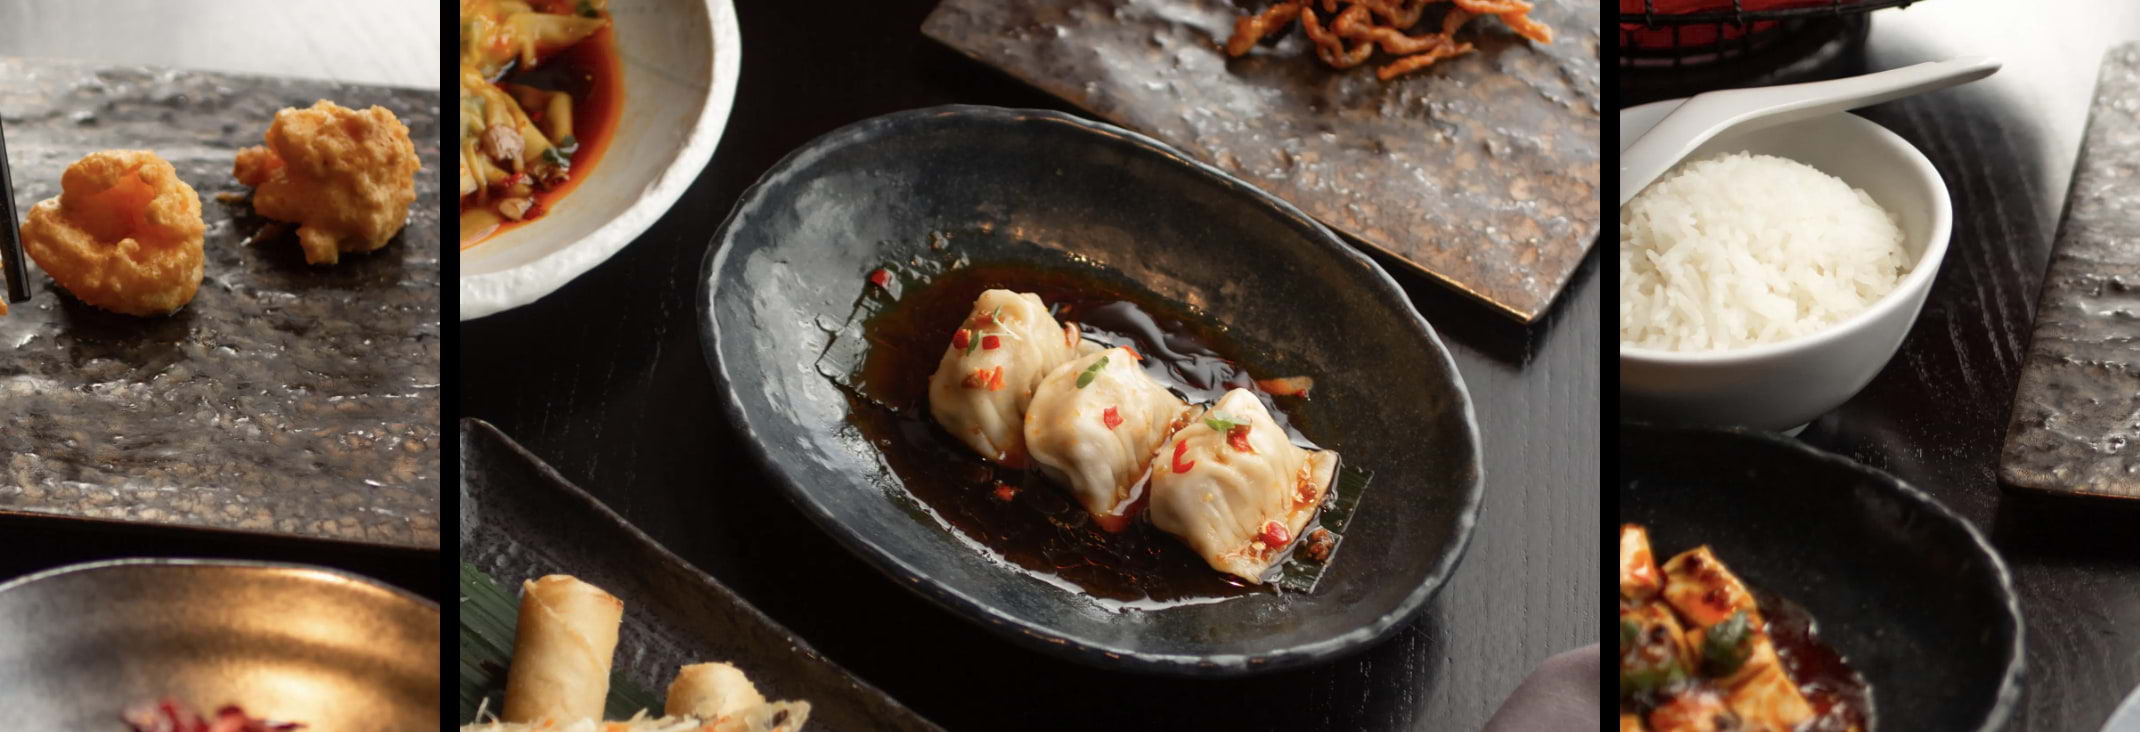 Hutong unveils new Dynasty Brunch menu